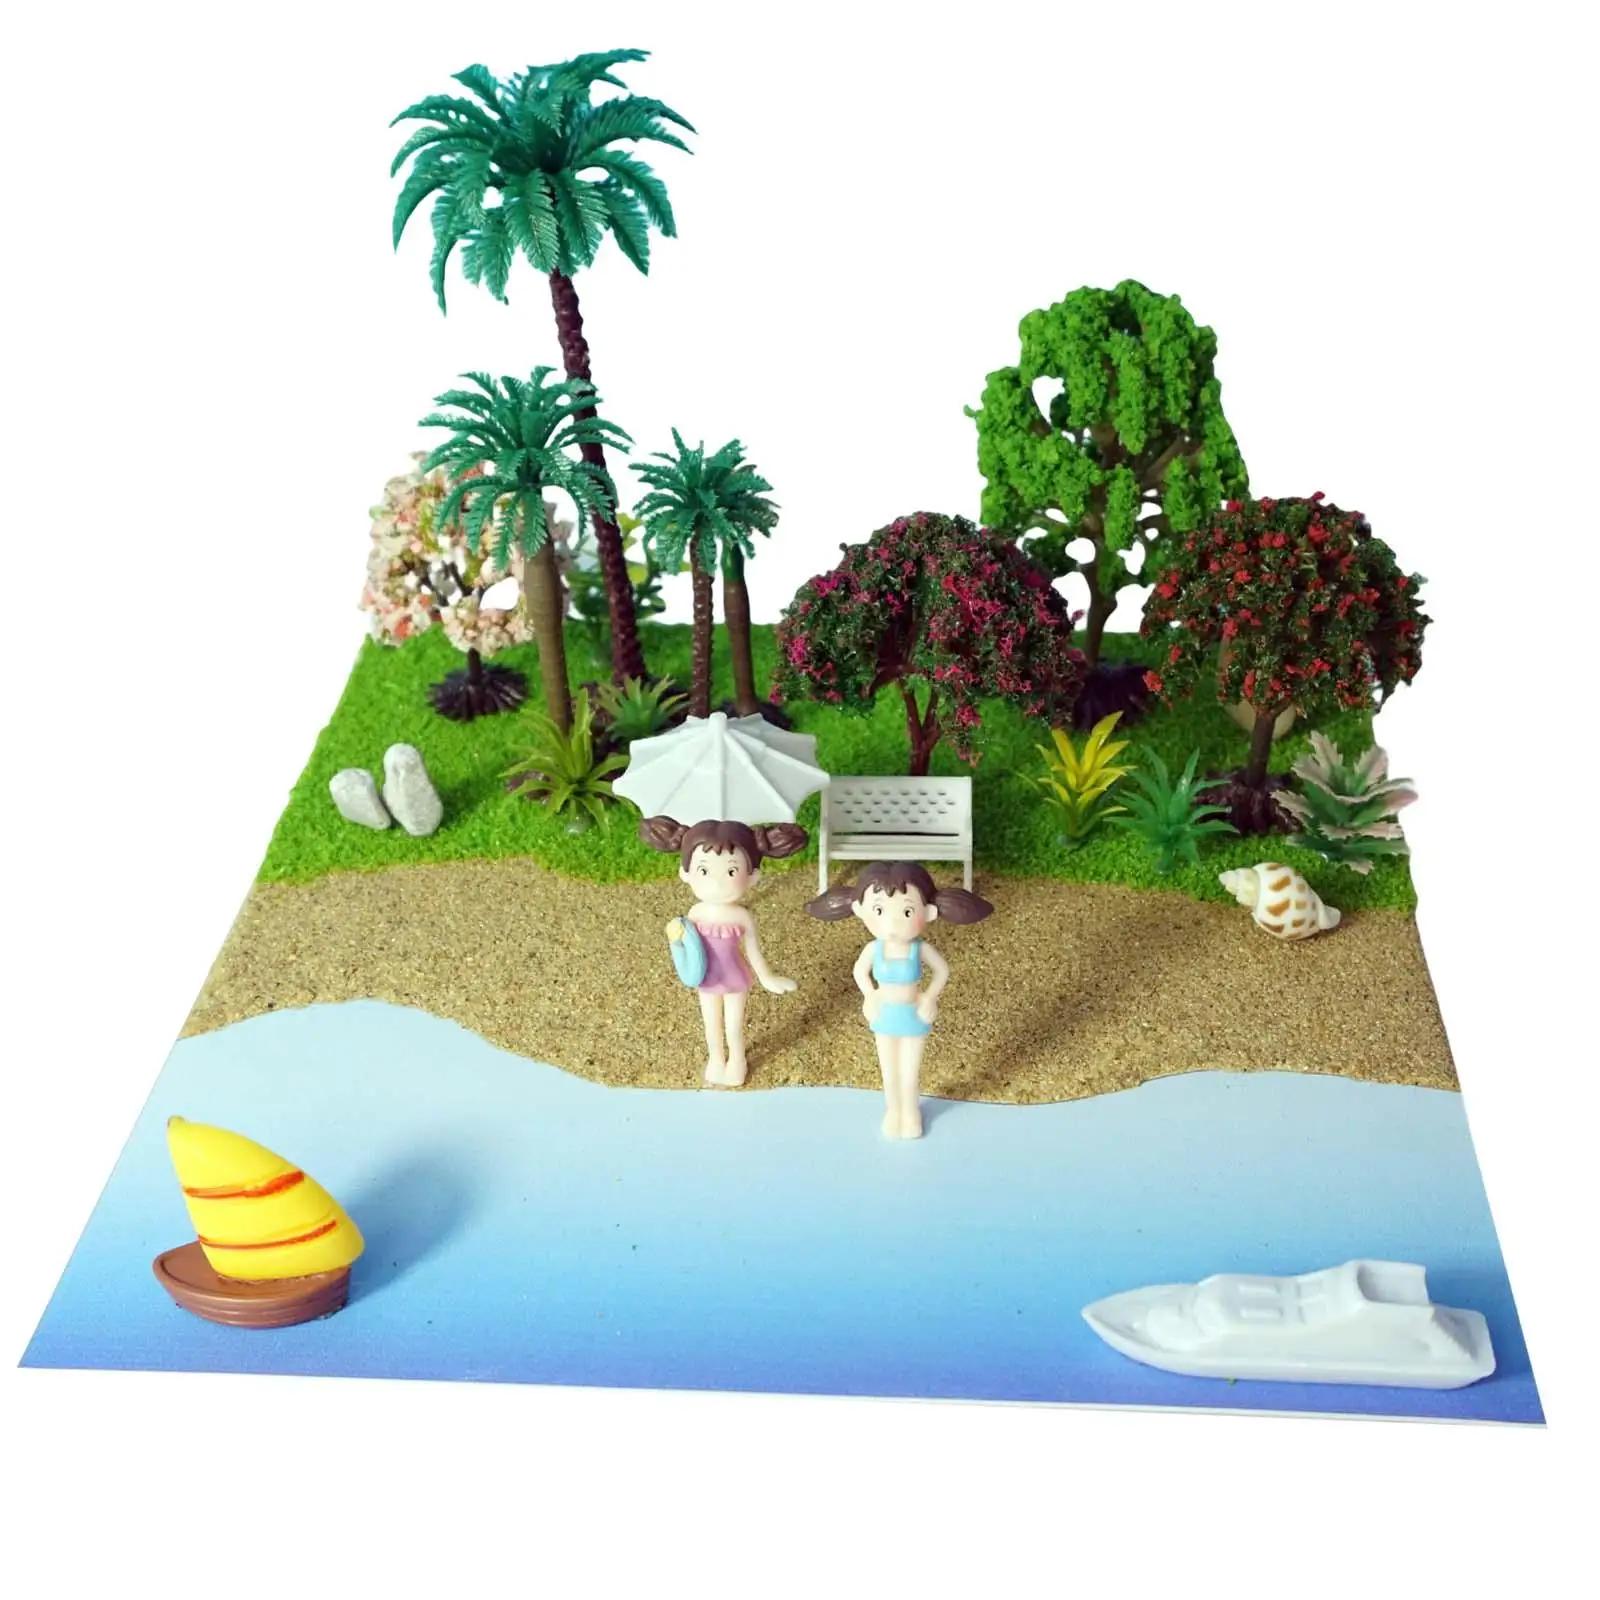 beach scenes Model Display Scene Interactive for Concentration Creativity